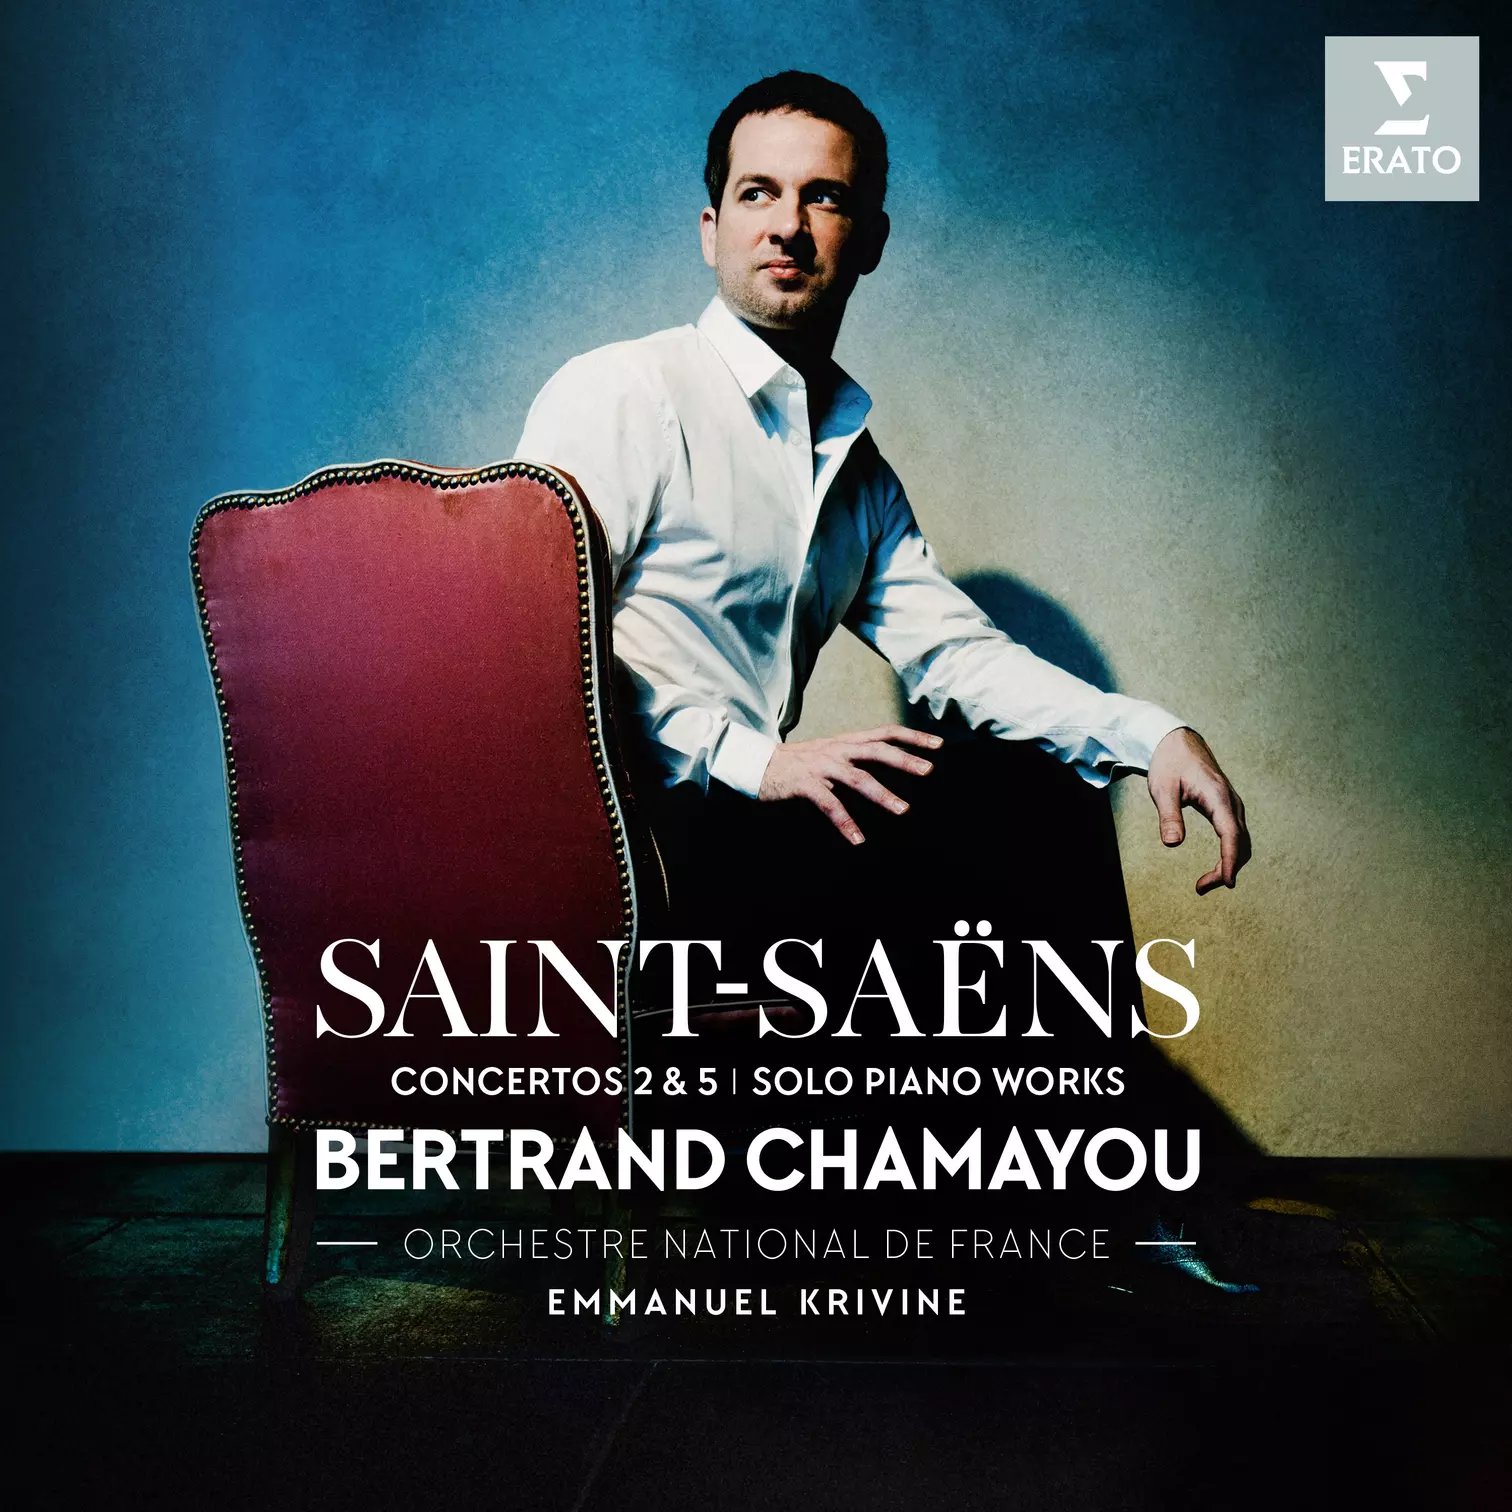 Saint-Saëns - Bertrand Chamayou